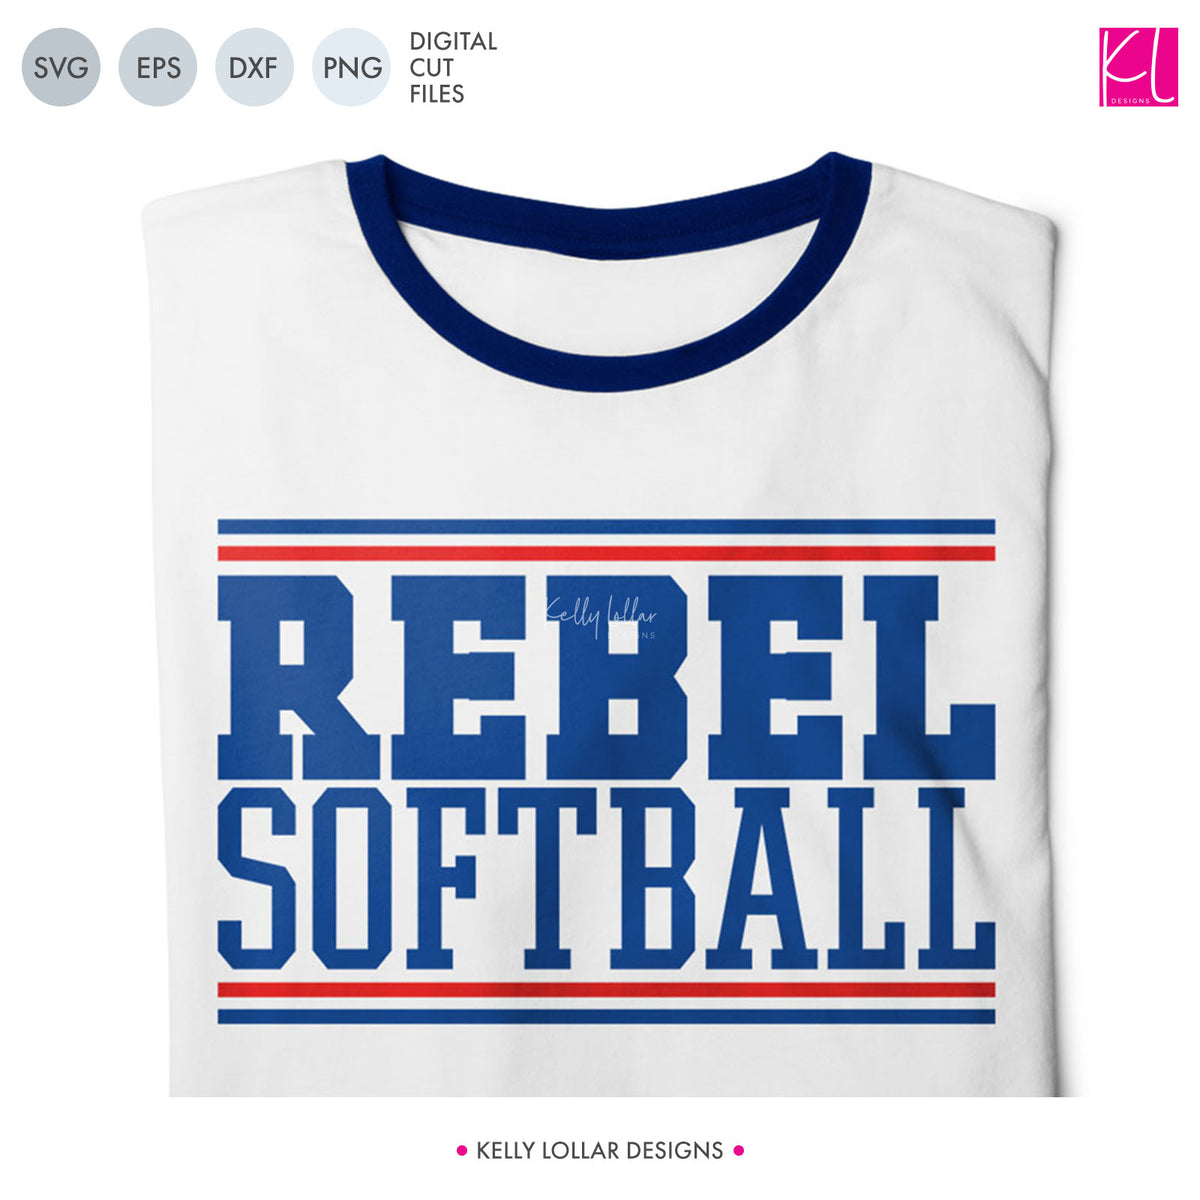 Rebels Baseball &amp; Softball Bundle | SVG DXF EPS PNG Cut Files